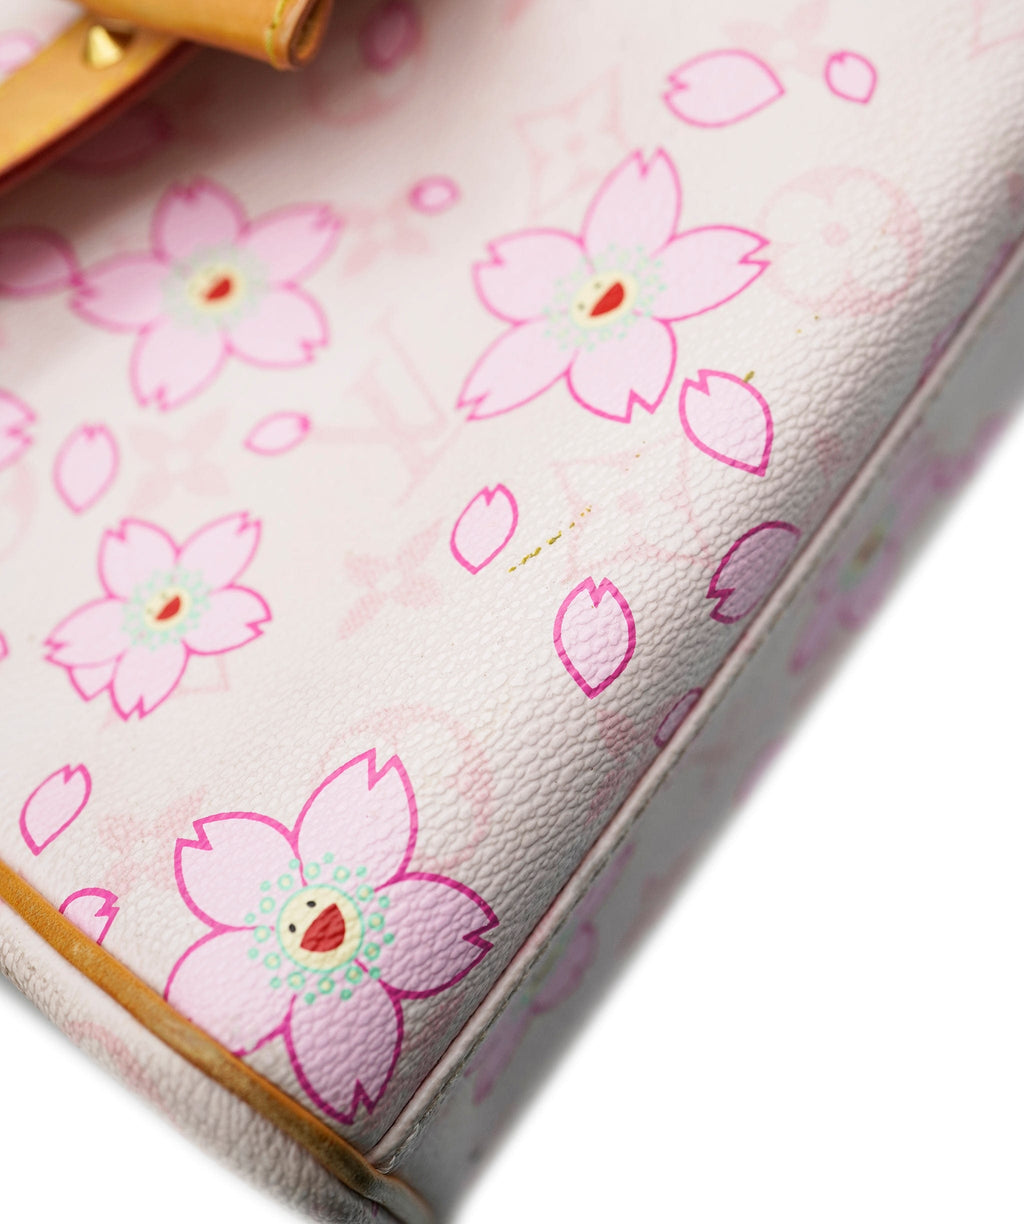 Louis Vuitton x Takashi Murakami Cherry Blossom Sac Retro Bag, myGemma, SG